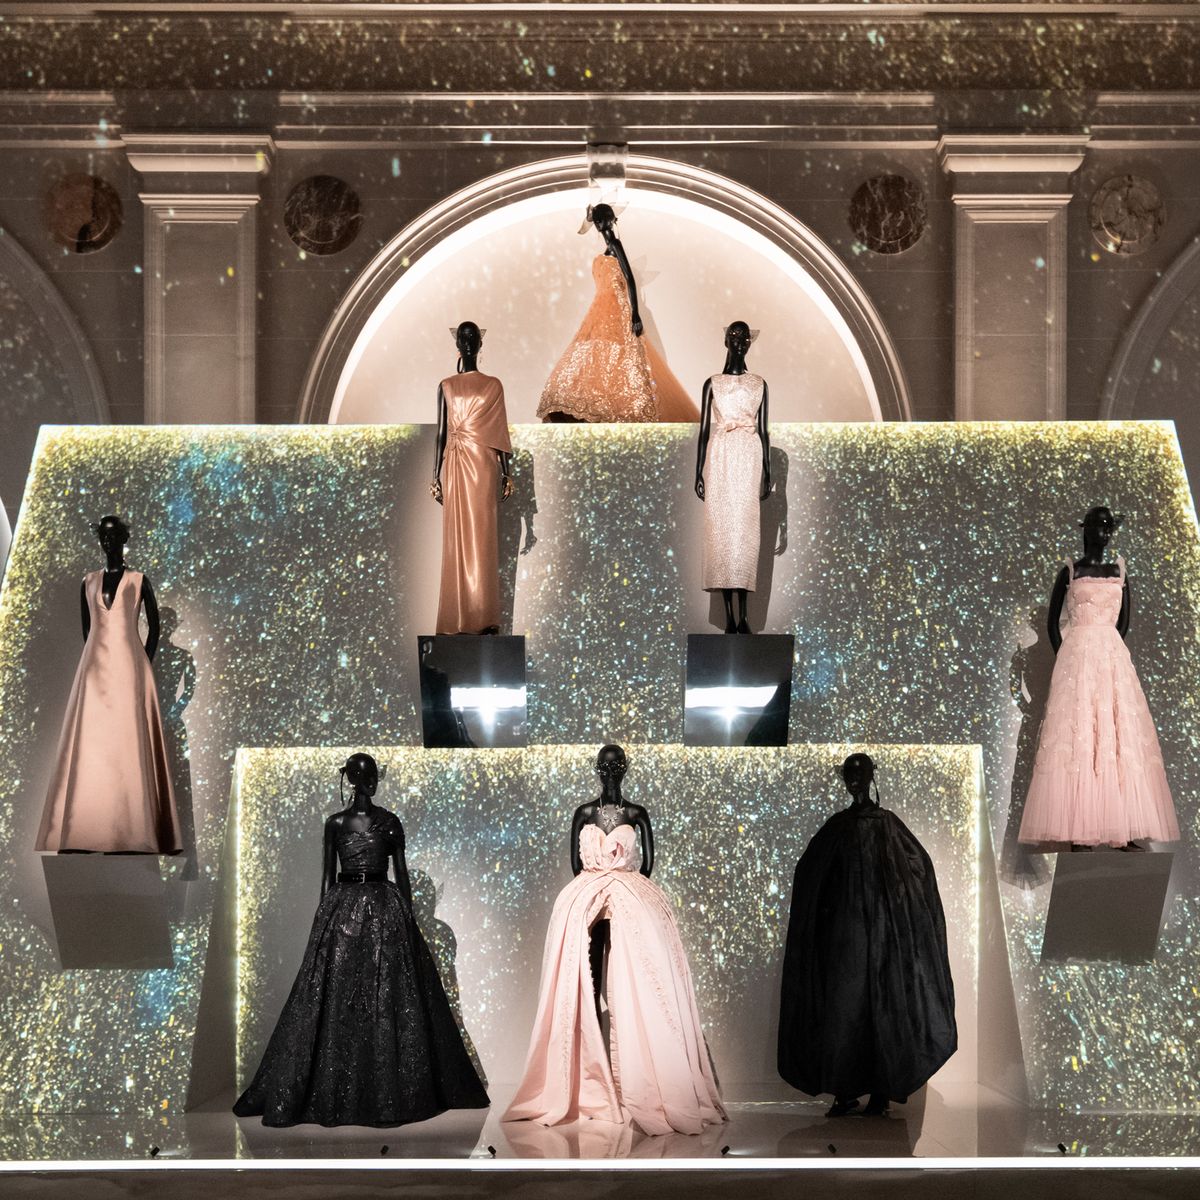 Christian Dior: The Designer of Dreams • We Are Fur